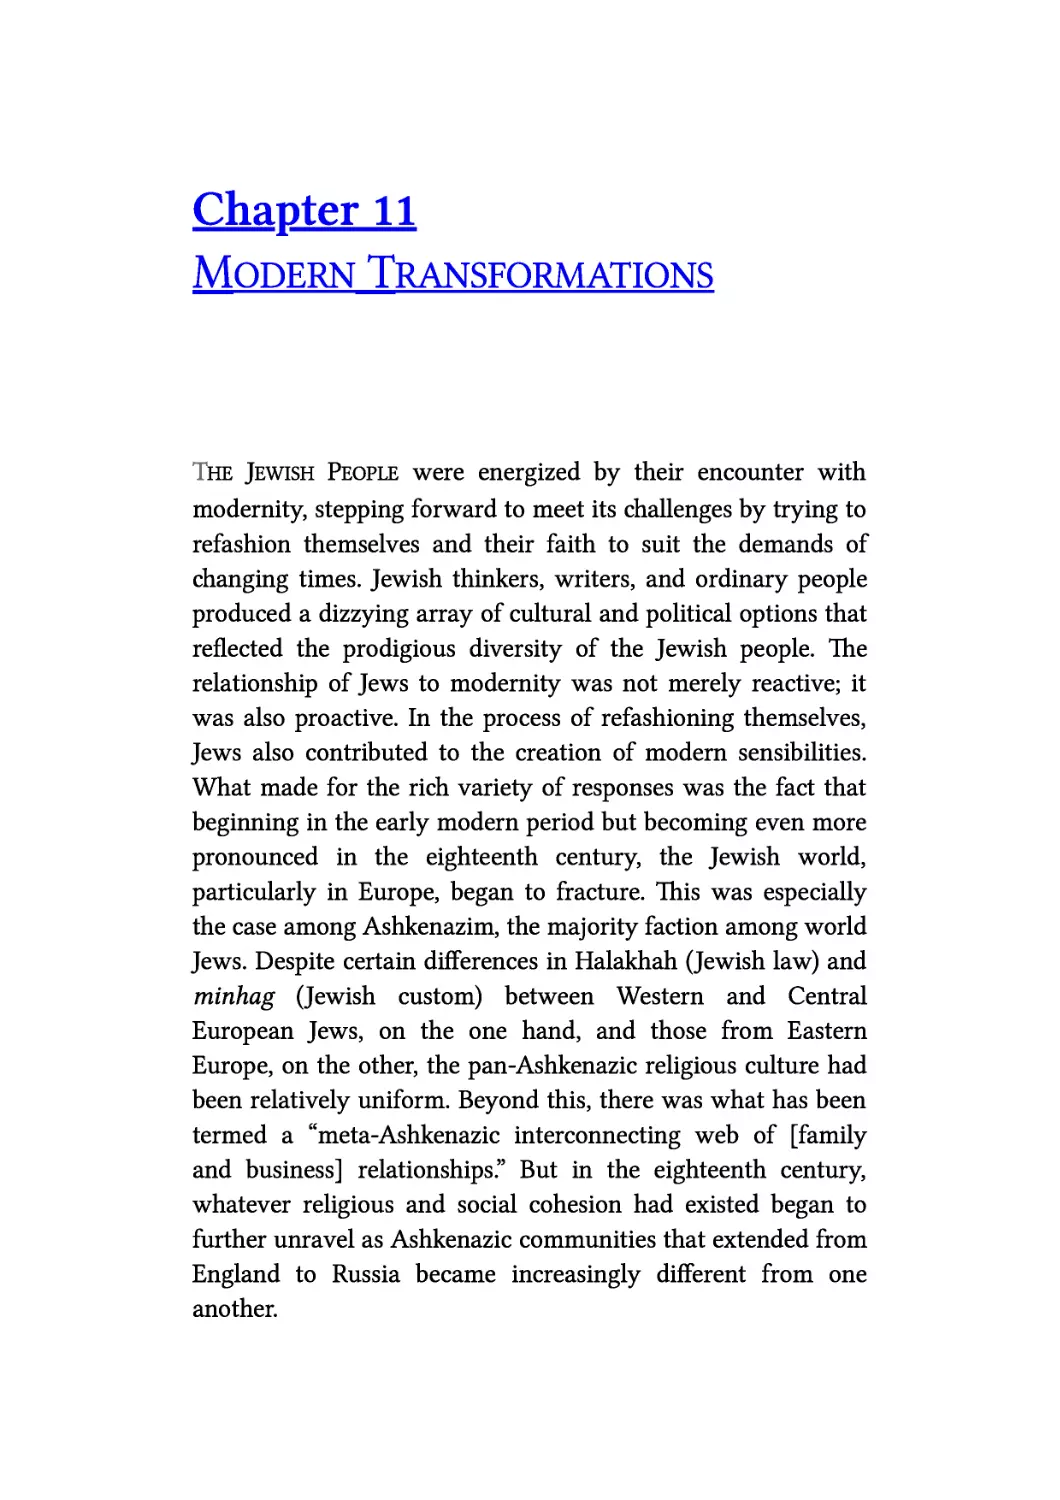 11. Modern Transformations